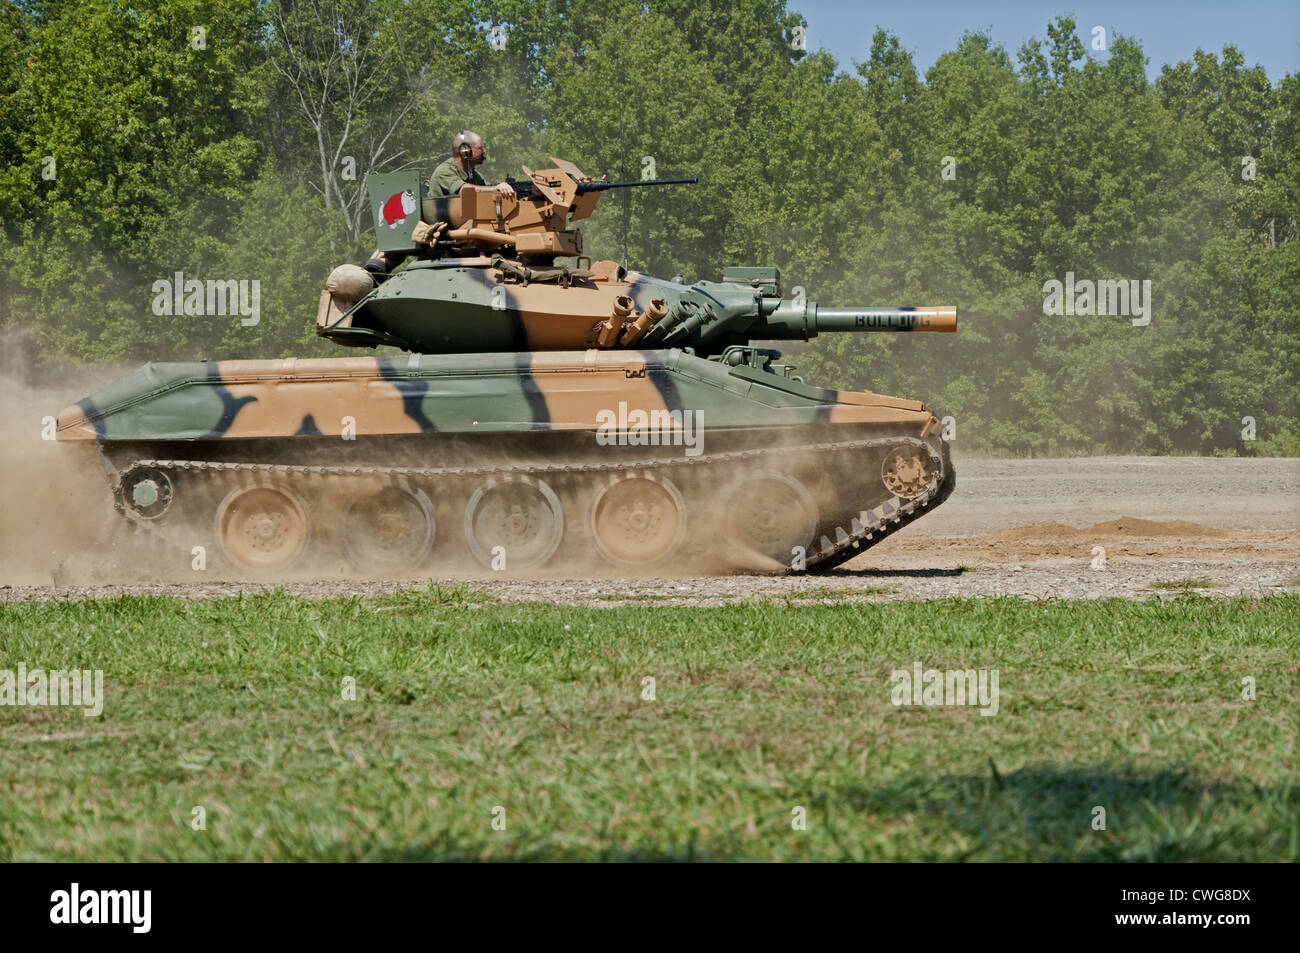 A restored Vietnam-era US M551 Sheridan tank making a fast charge across open ground. Stock Photo